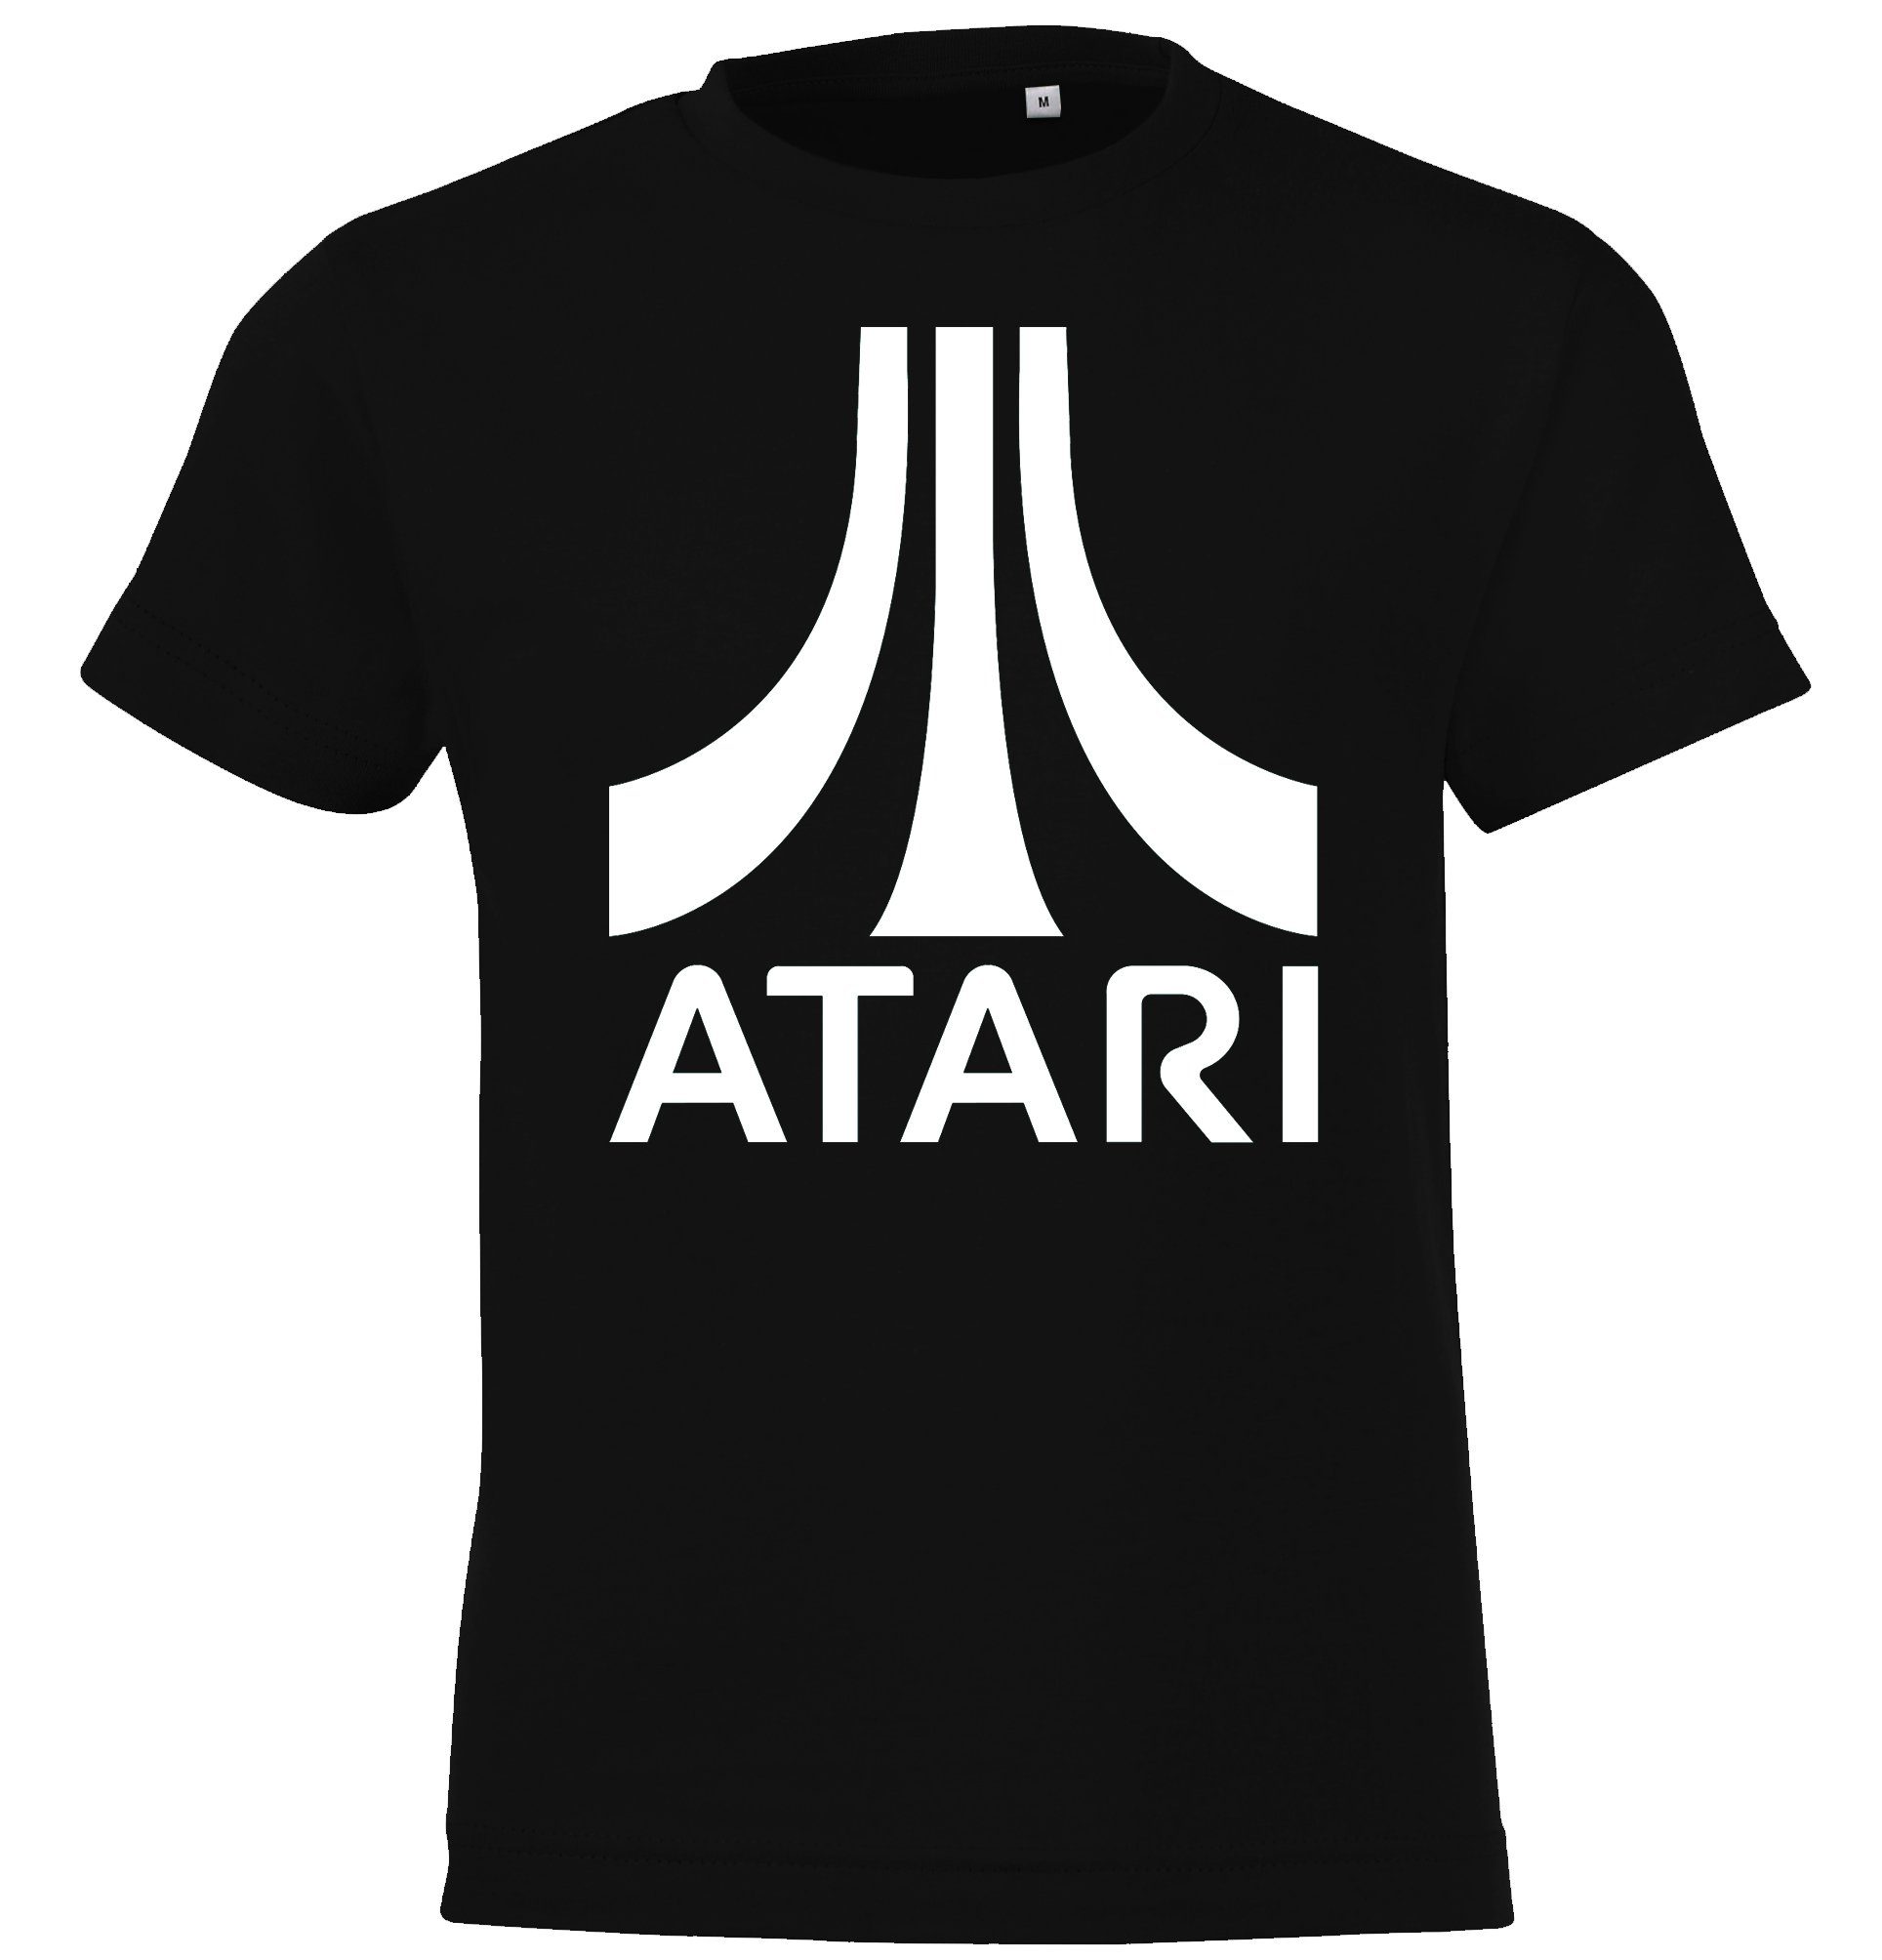 Designz Frontprint T-Shirt Kinder Youth Atari Schwarz T-Shirt mit trendigem